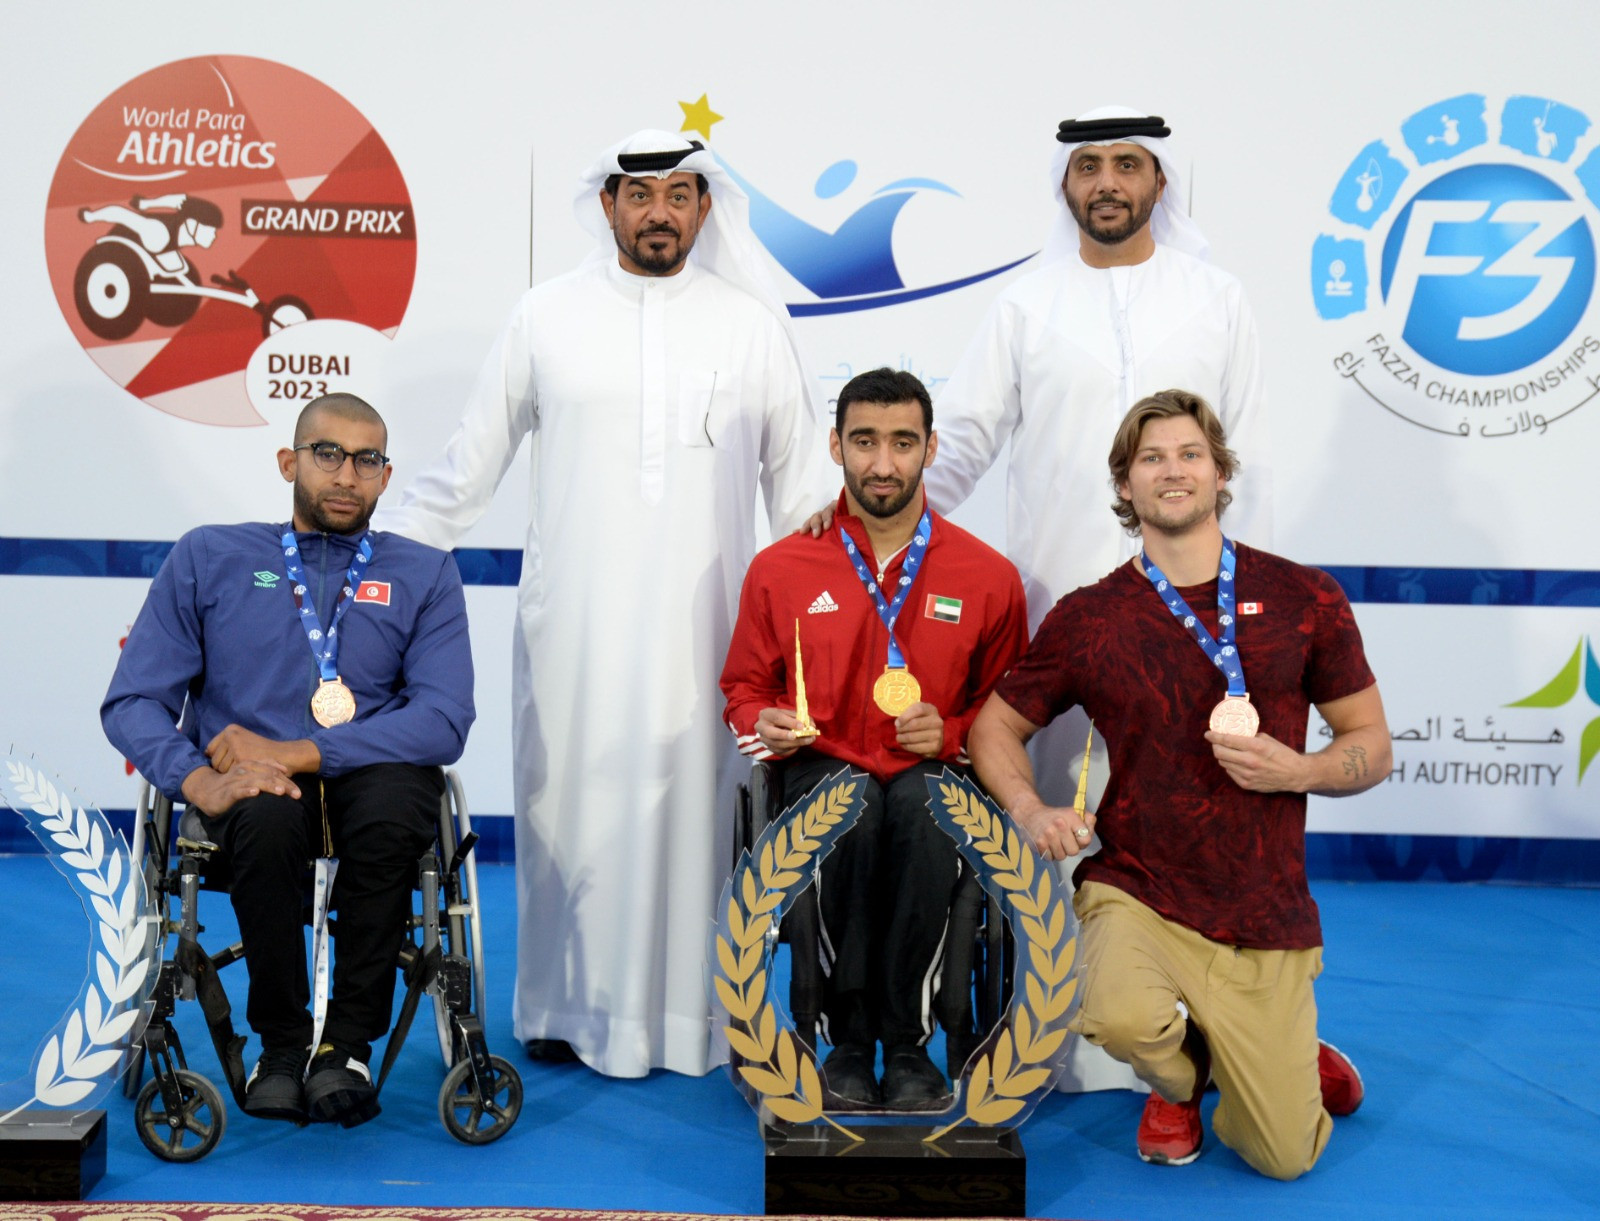 Mohammed Alhammadi, centre, set the Asian record for the men's 400m T34 at the Dubai 2023 World Para Athletics Grand Prix ©DCD